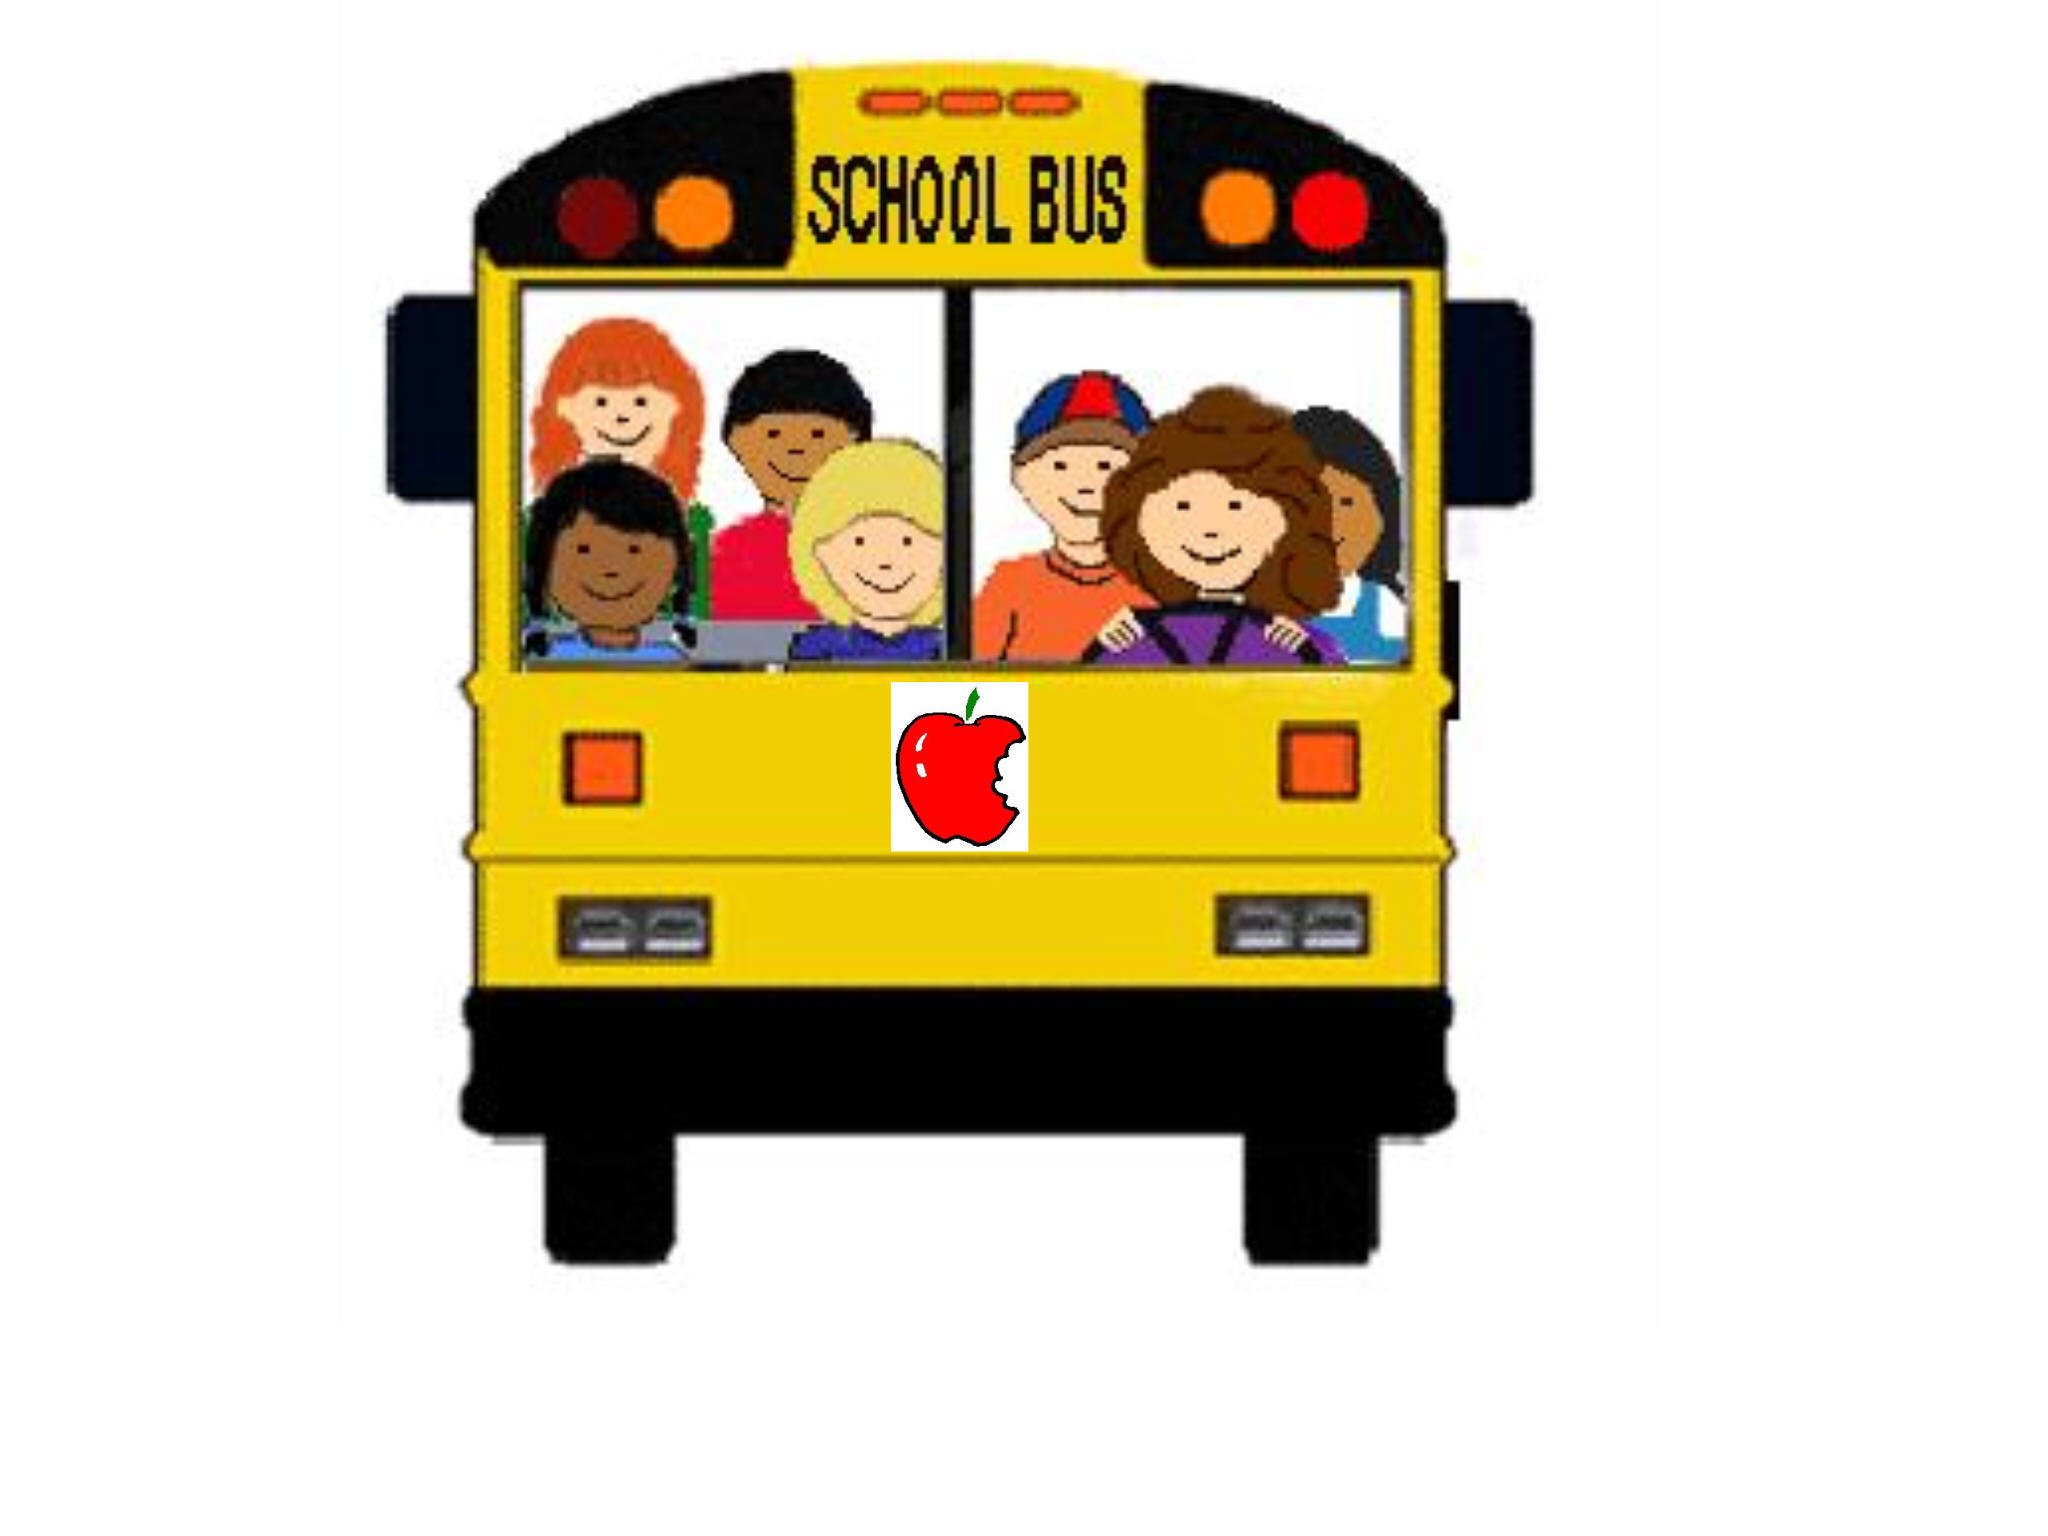 School bus clip art for kids